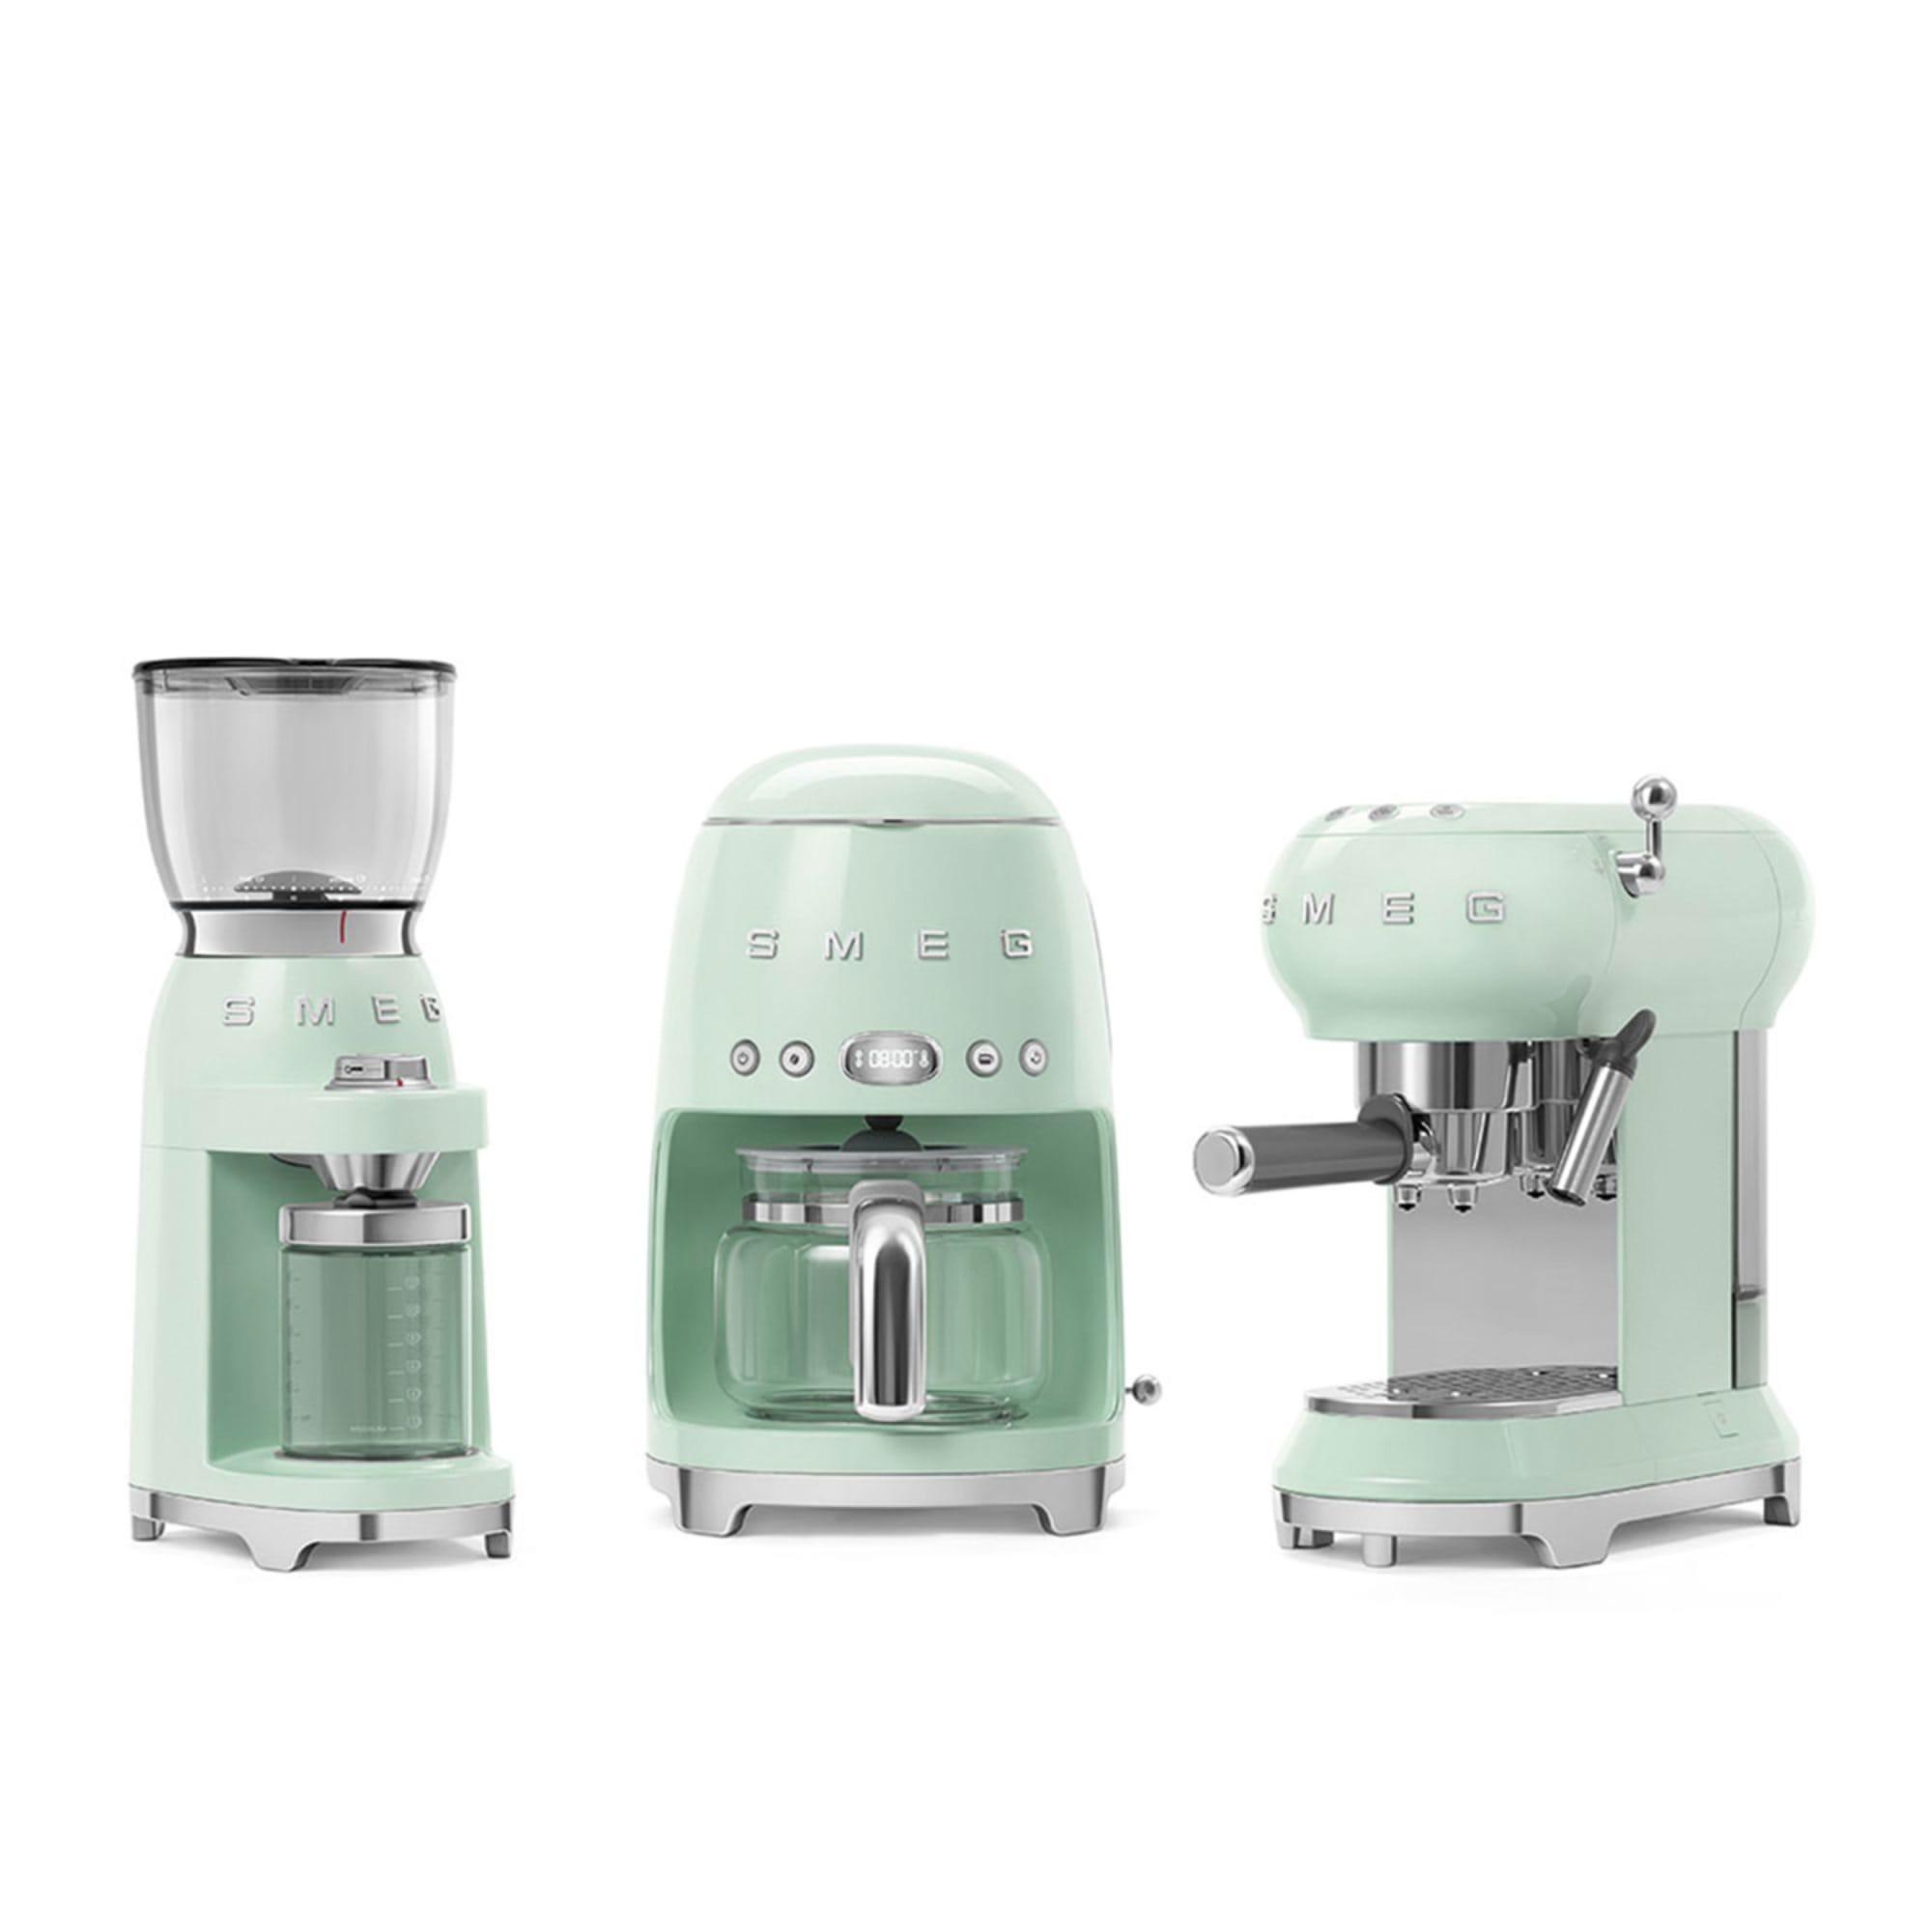 Smeg 50s Retro Style Espresso Coffee Machine Pastel Green Image 5